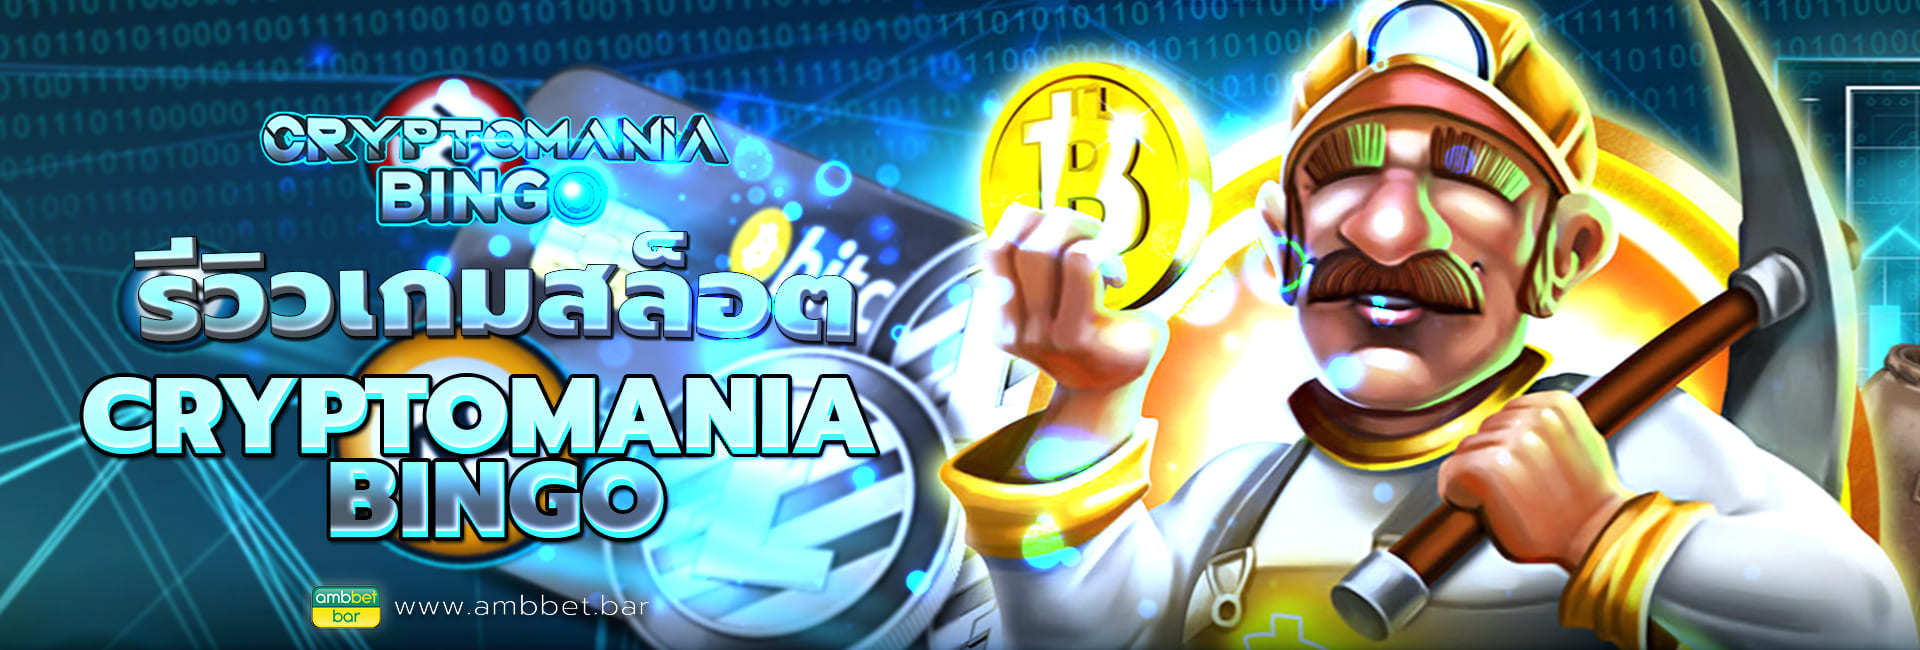 Cryptomania Bingo banner